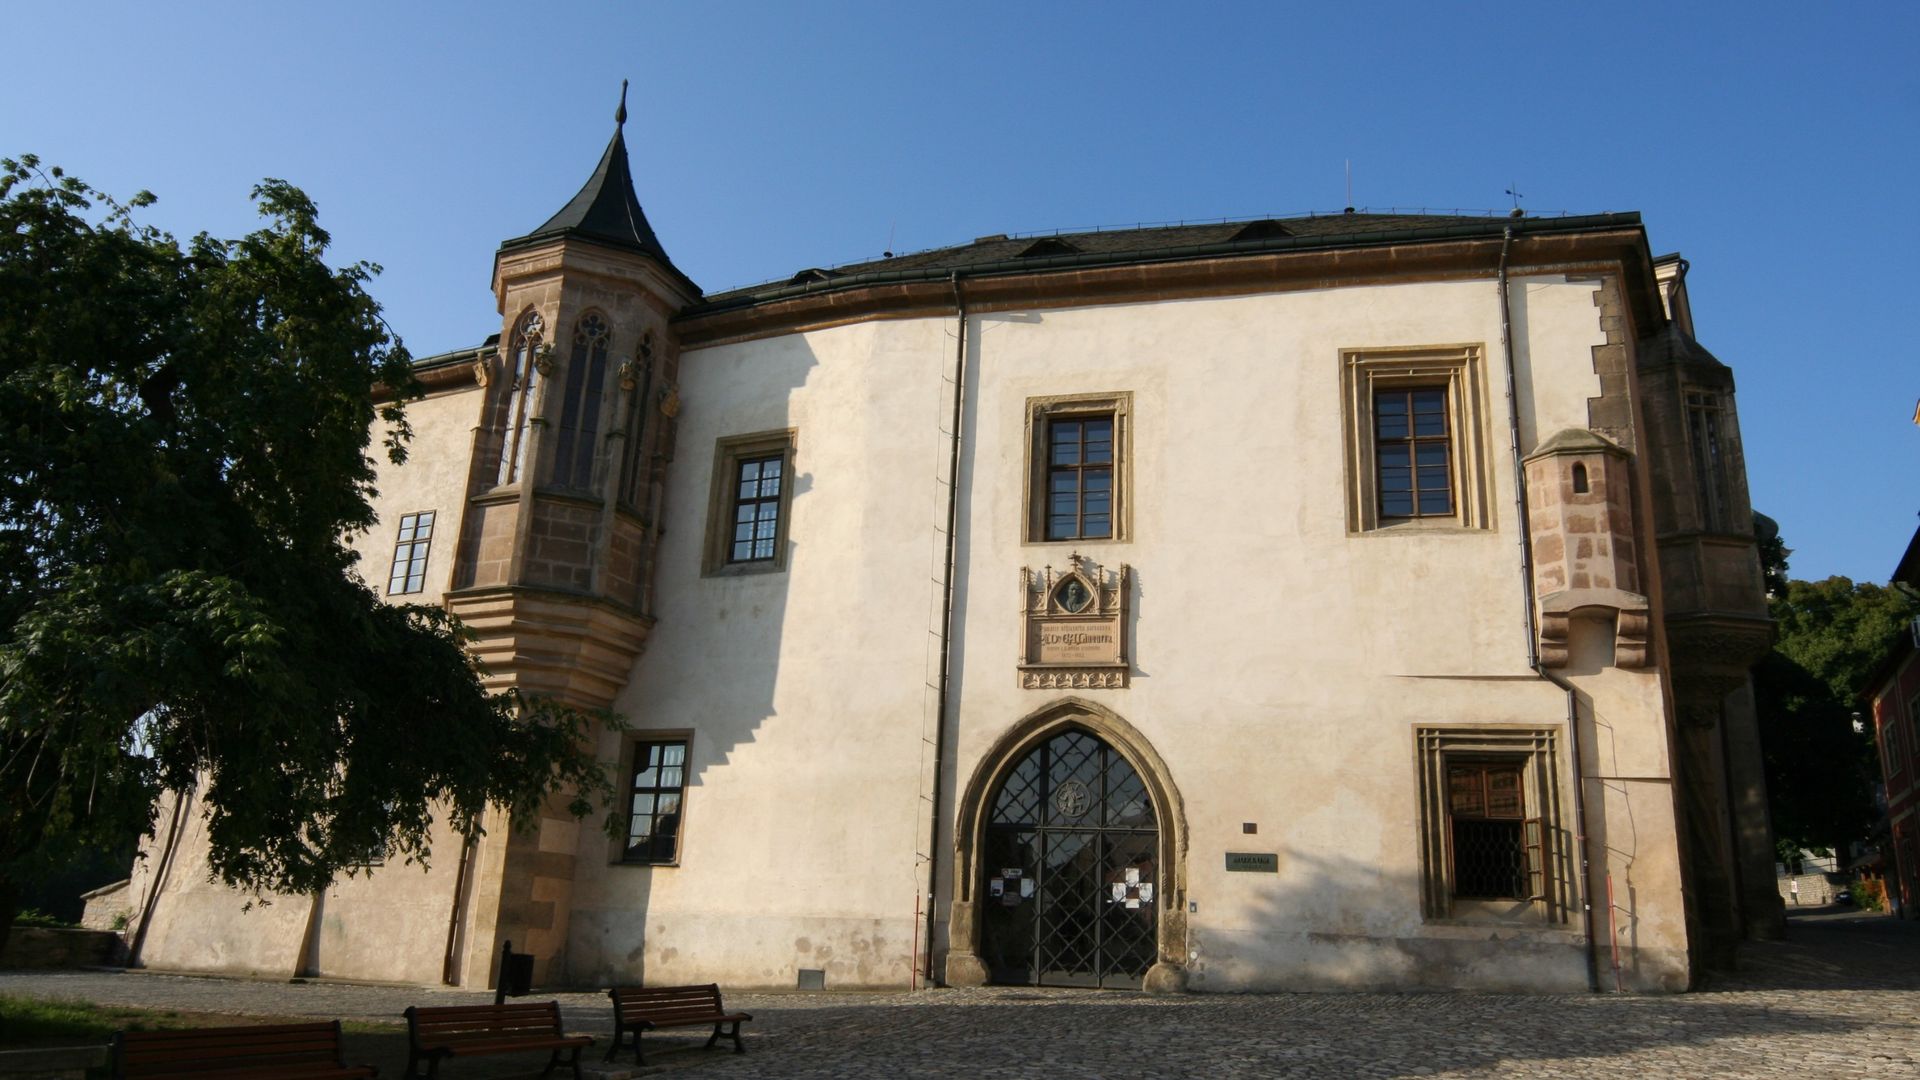 Hradek - Czech Museum of Silver